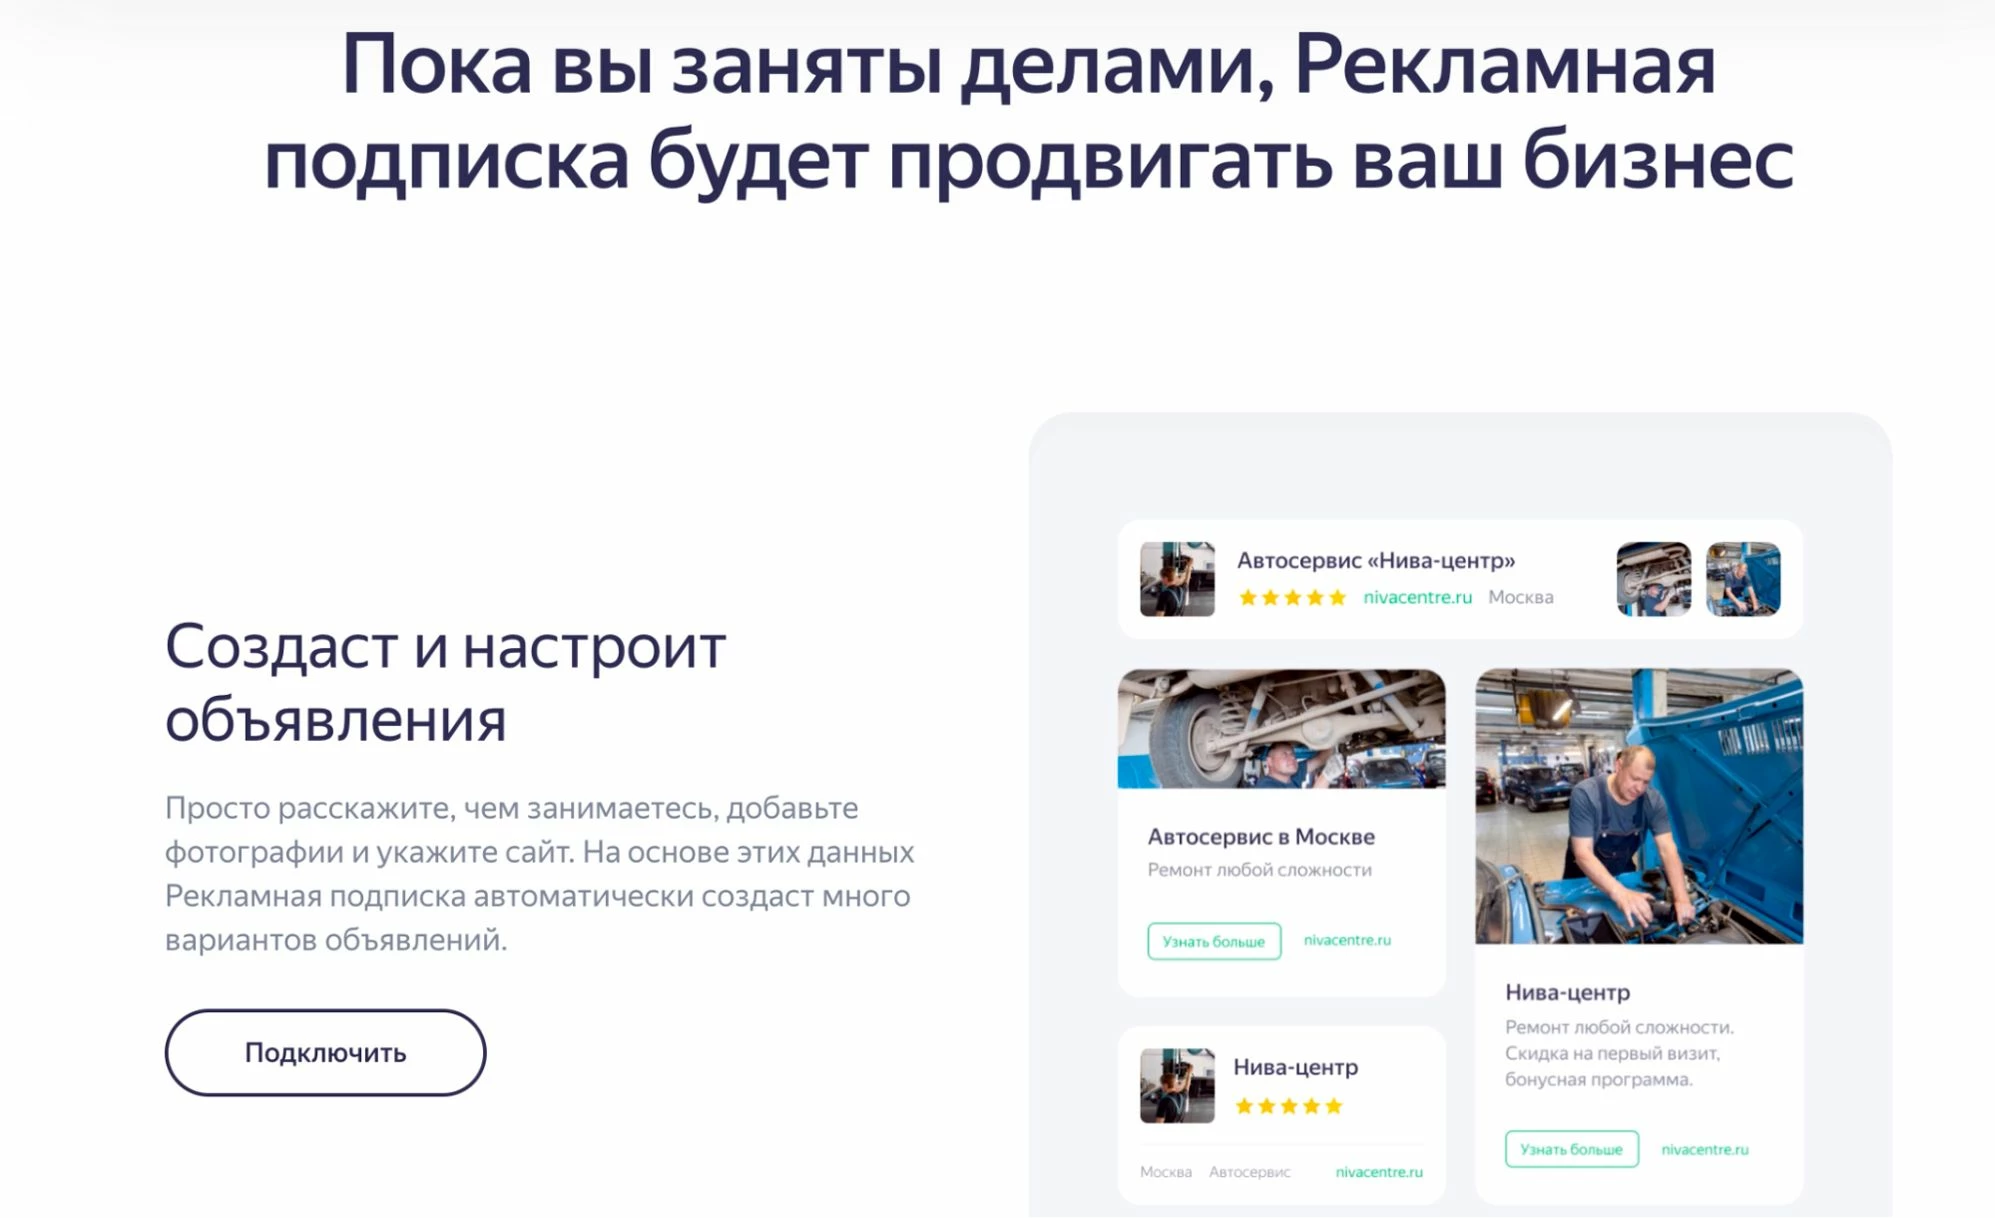 Проджижение бизнеса в Яндекс Бизнес